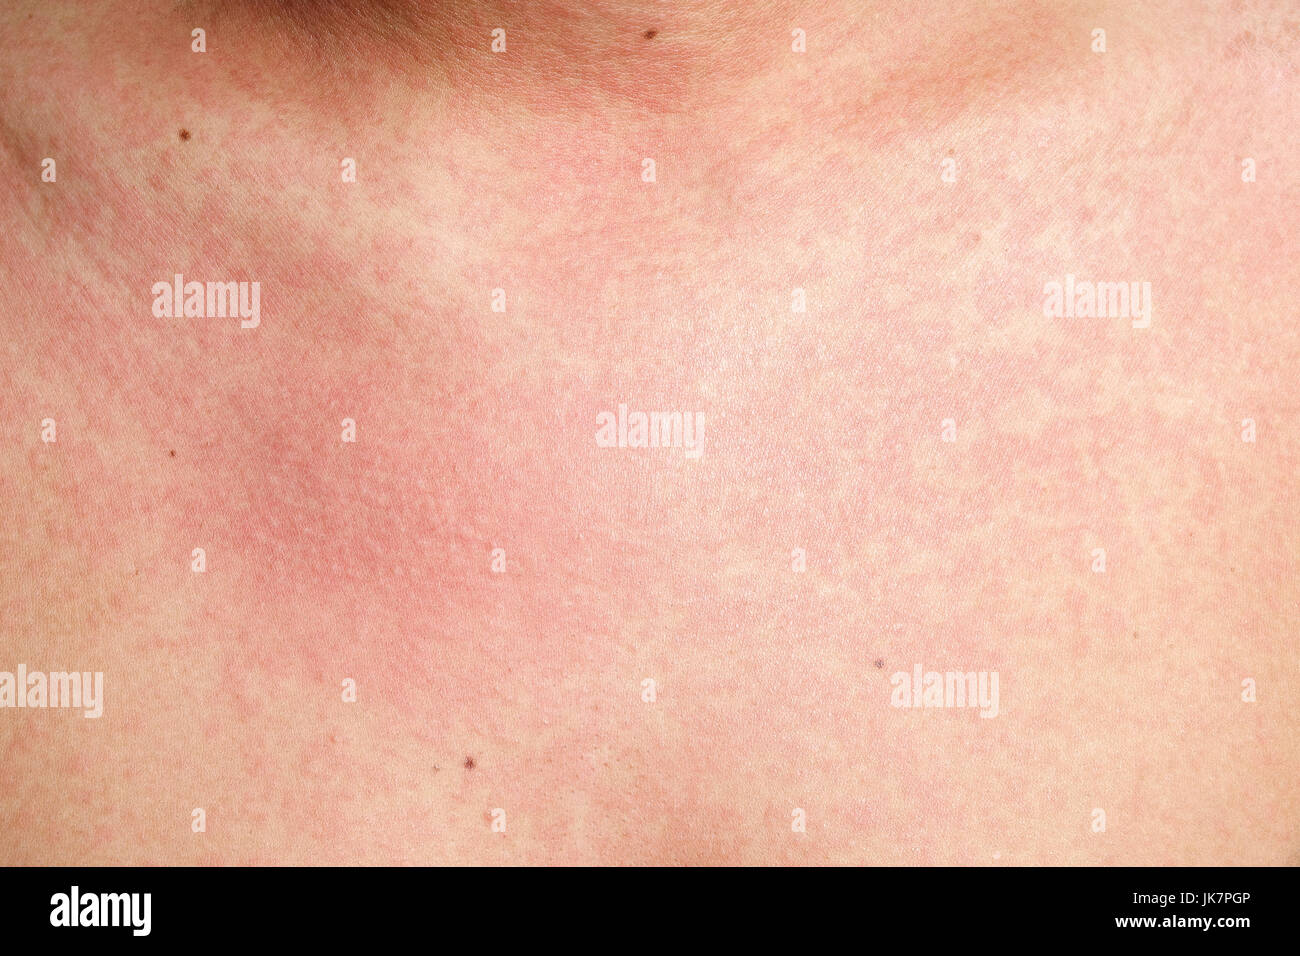 Man with dermatitis problem of rash ,Allergy rash Stock Photo